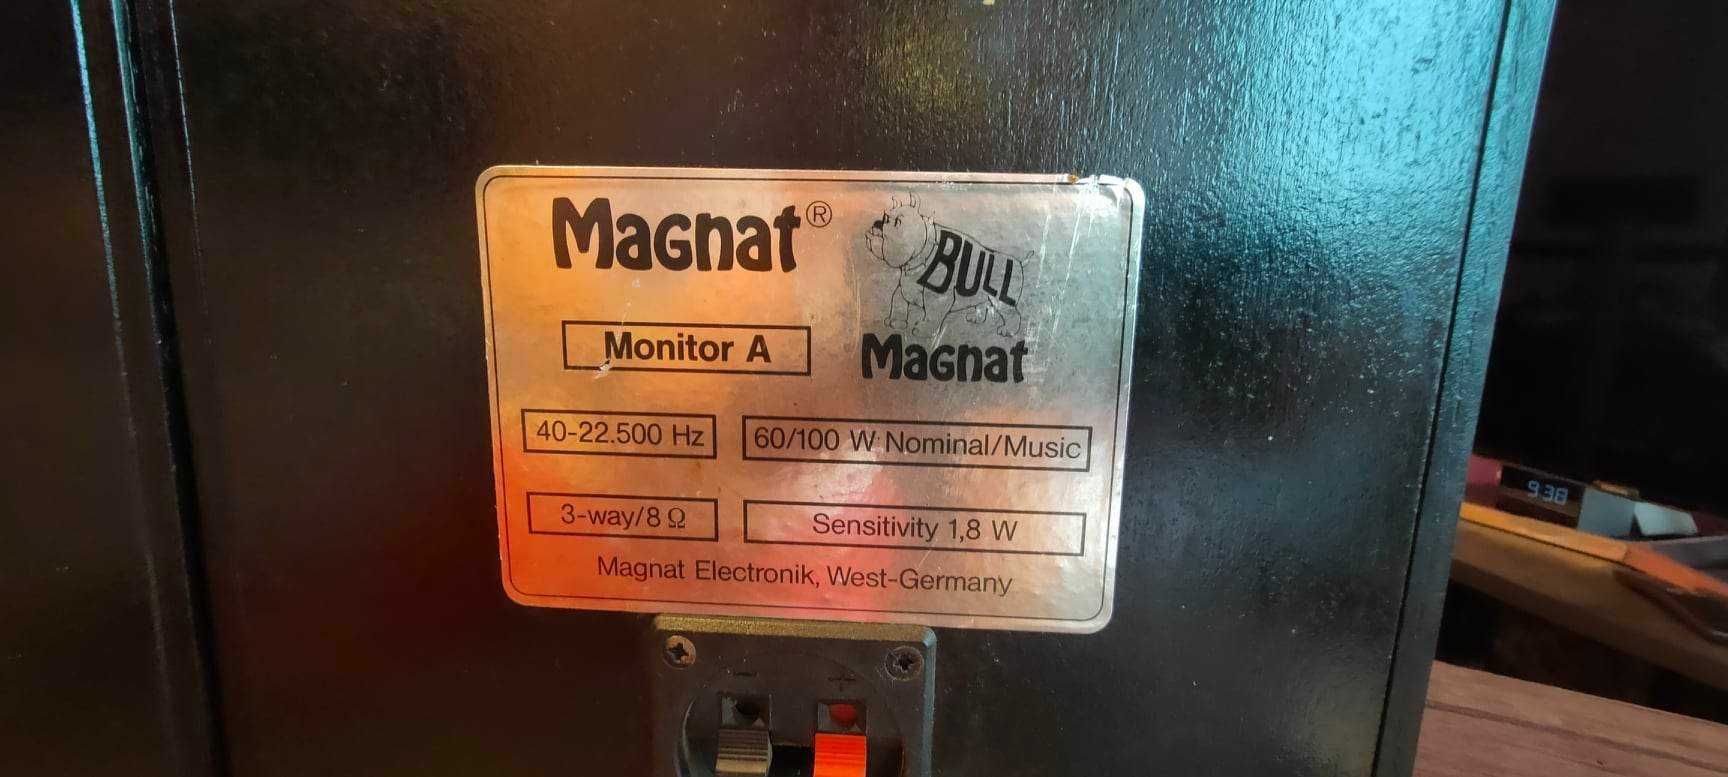 Magnat Monitor A